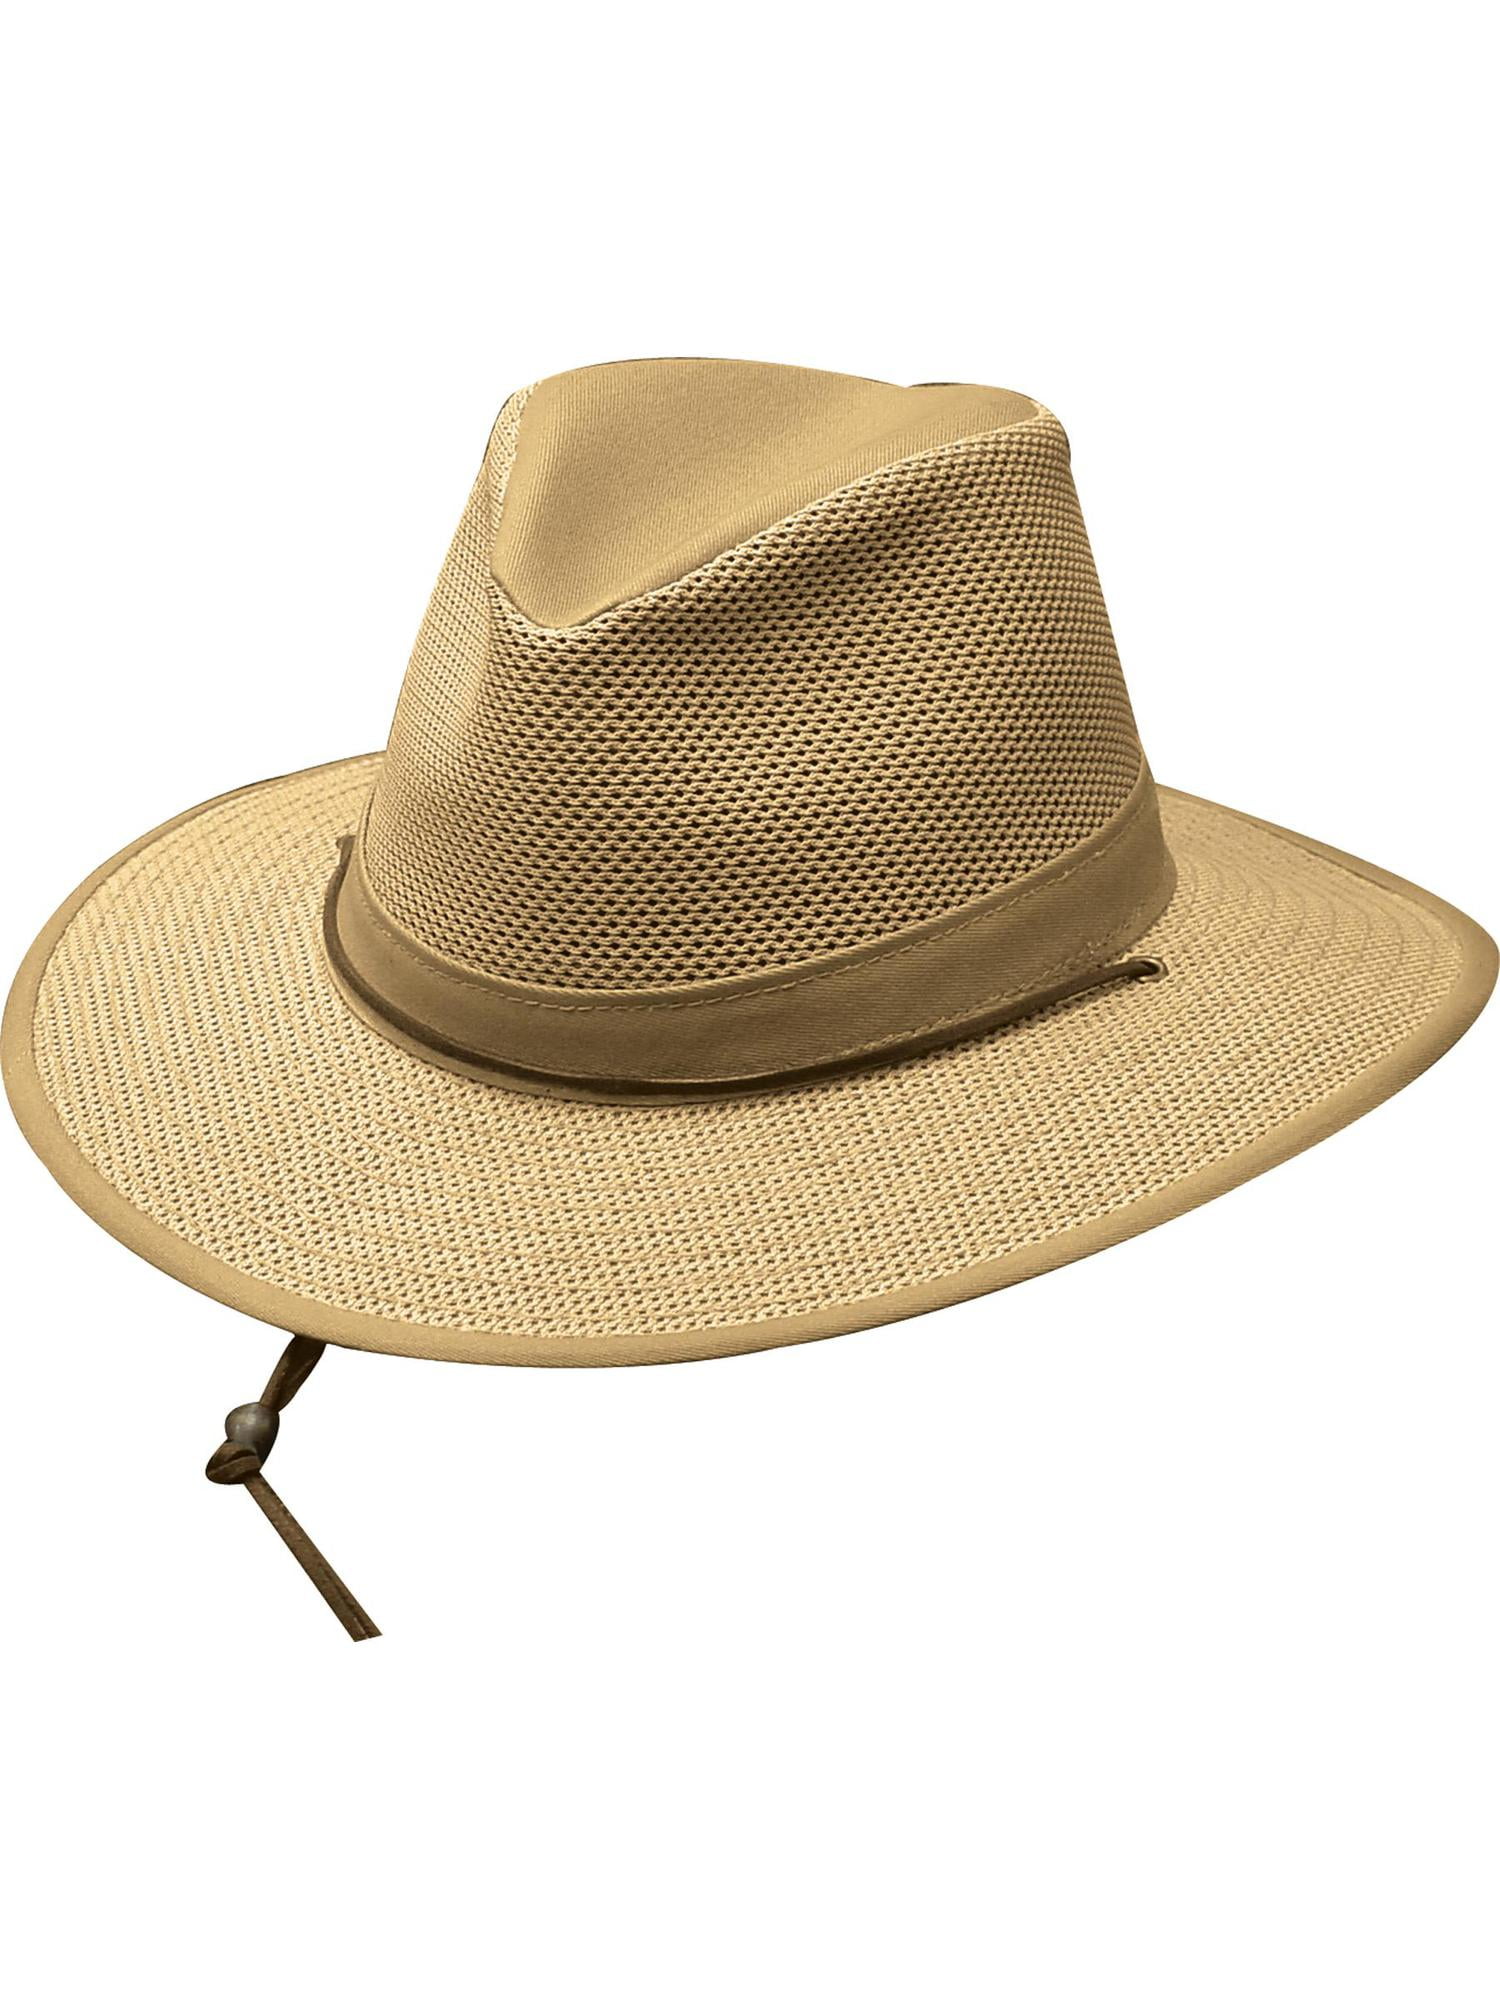 Henschel Polycotton Packable Mesh Breezer Safari Hat Men